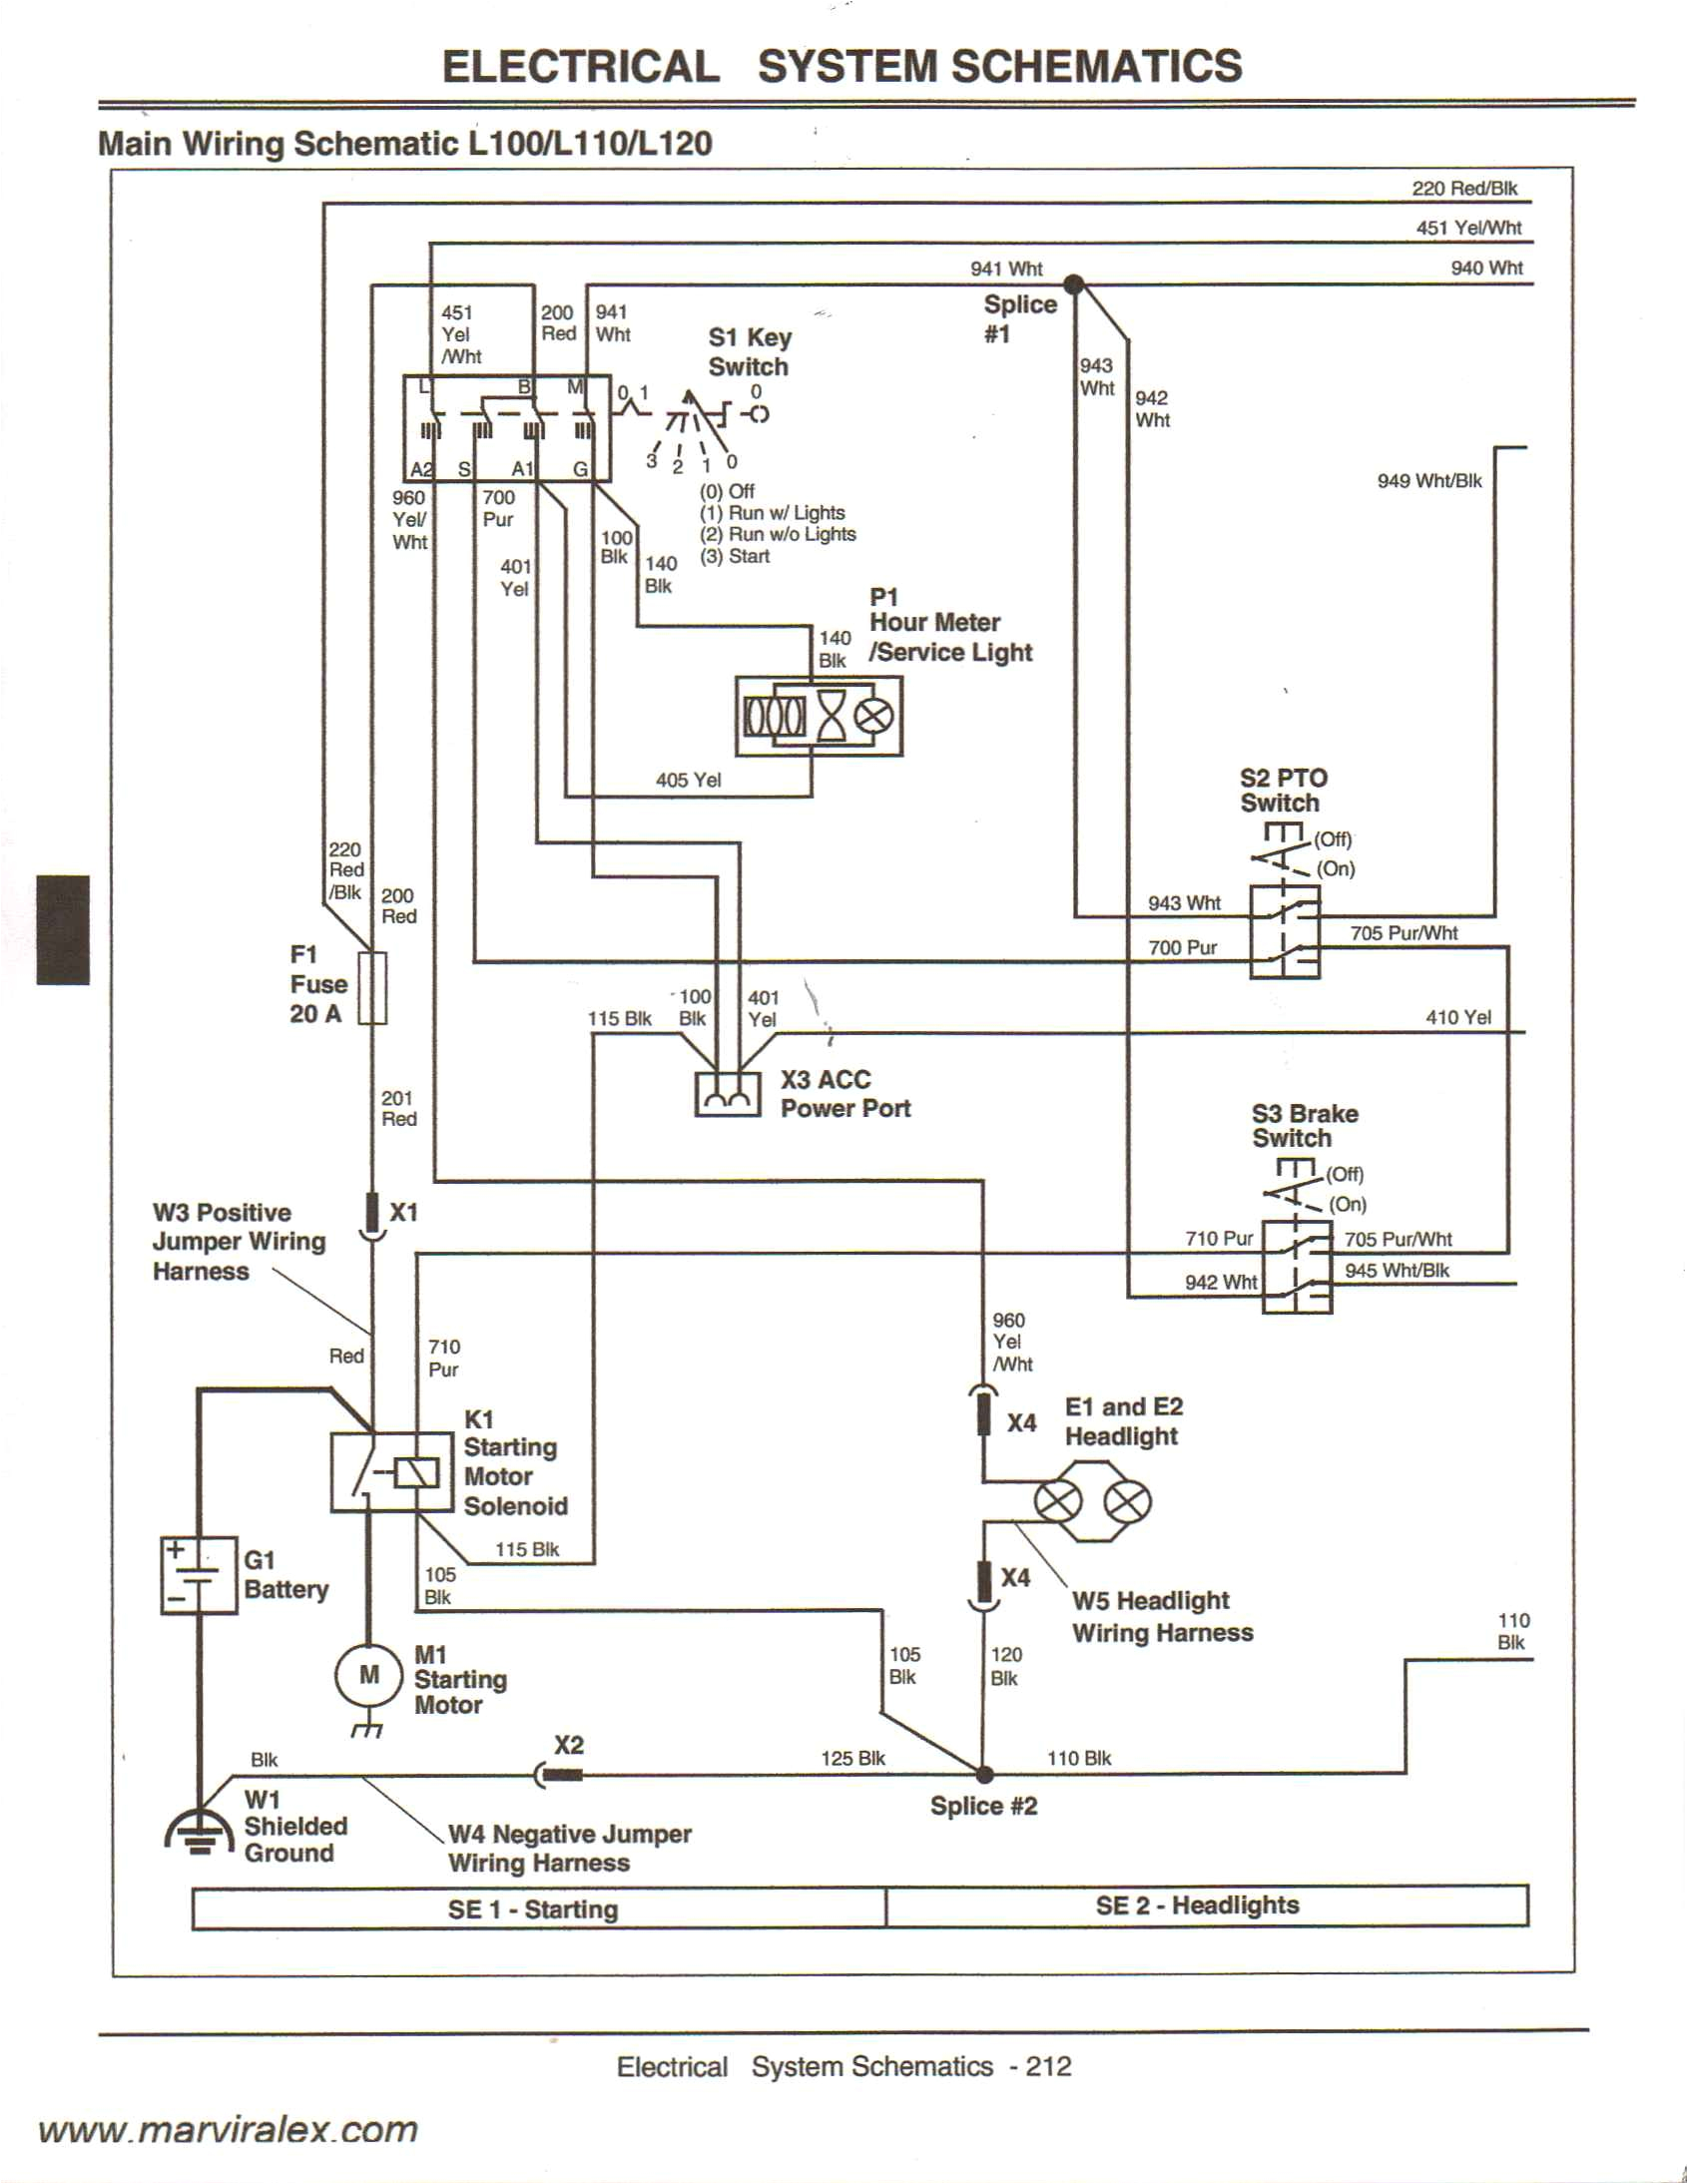 john deere lawn tractor electrical diagram wiring diagram inside john deere 155c electrical diagram john deere